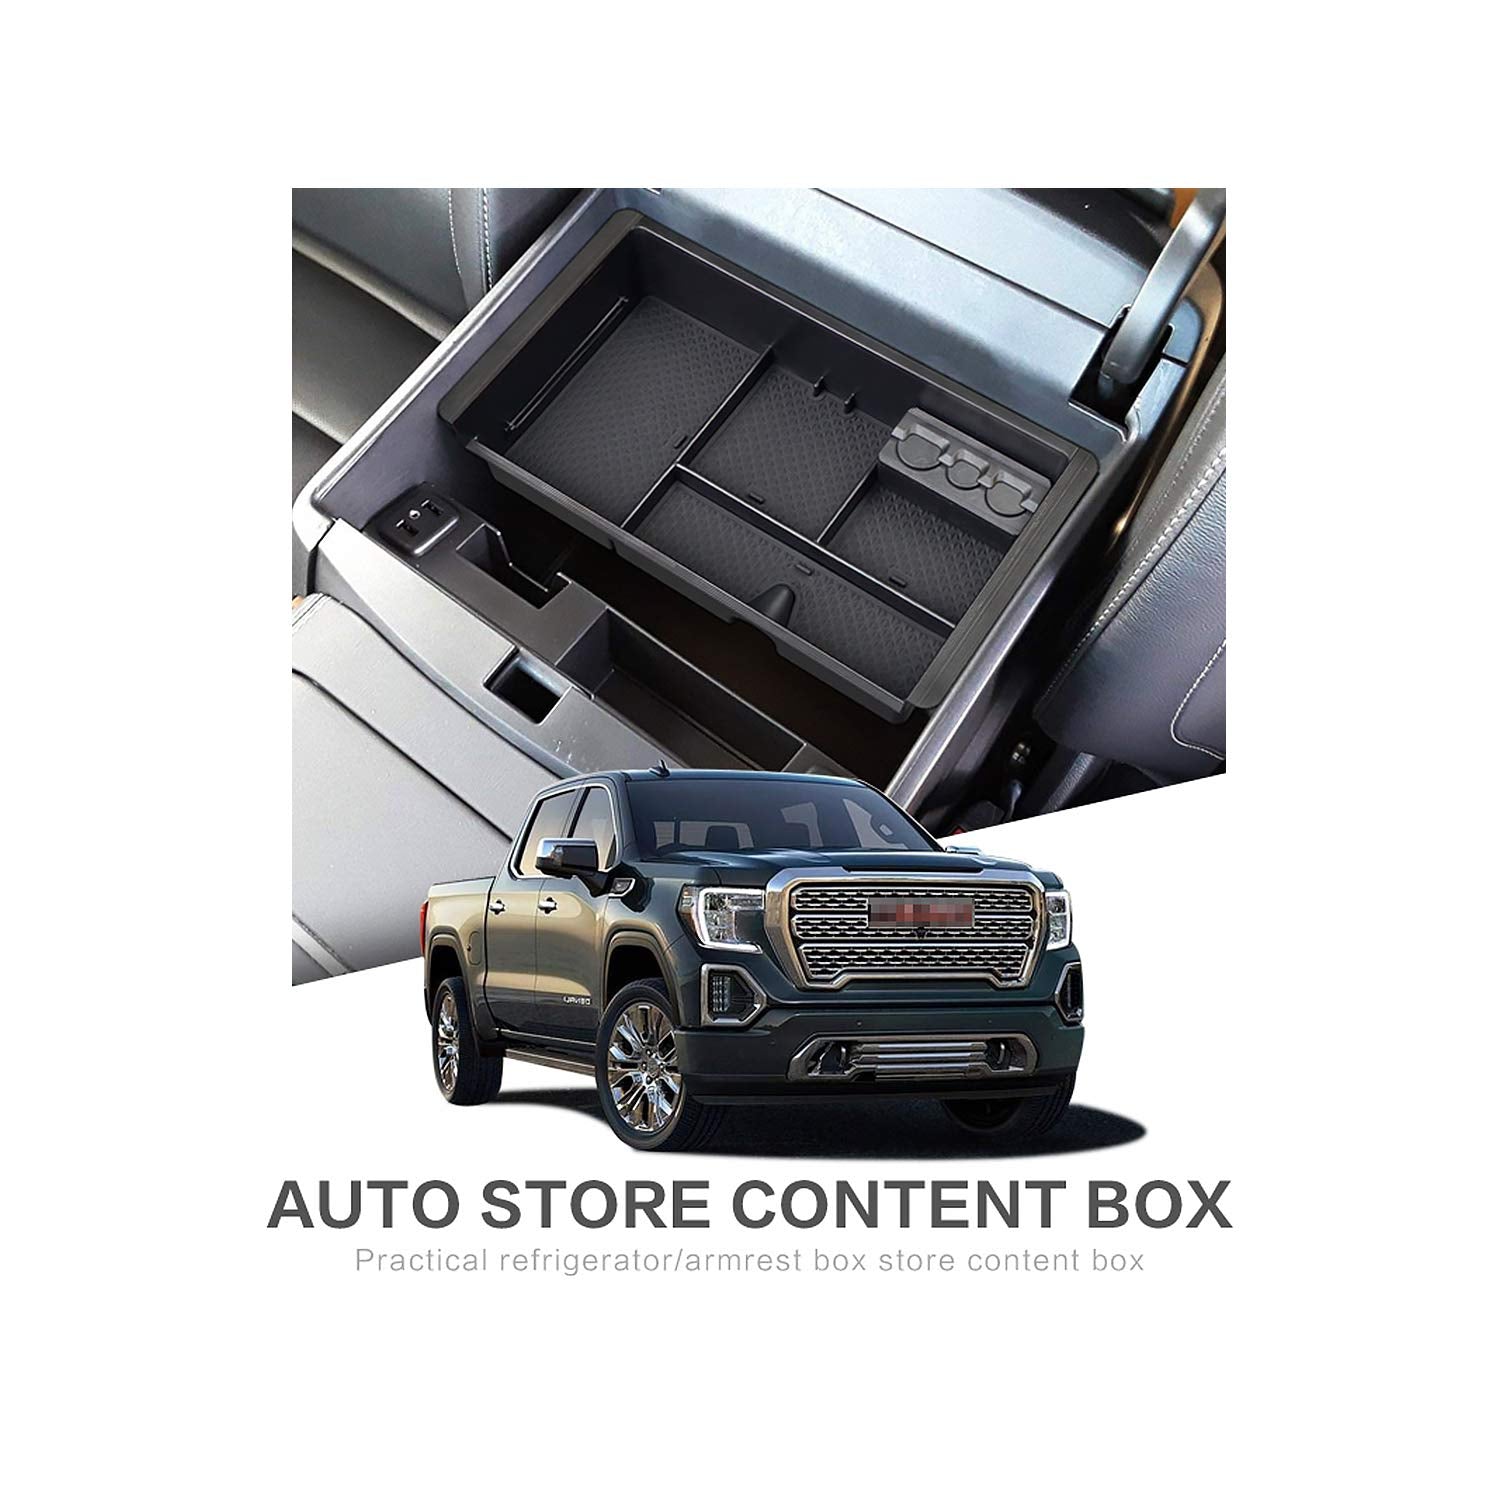 Chevy Silverado Center Console Organizer Tray 2014-2018 - LFOTPP Car Accessories